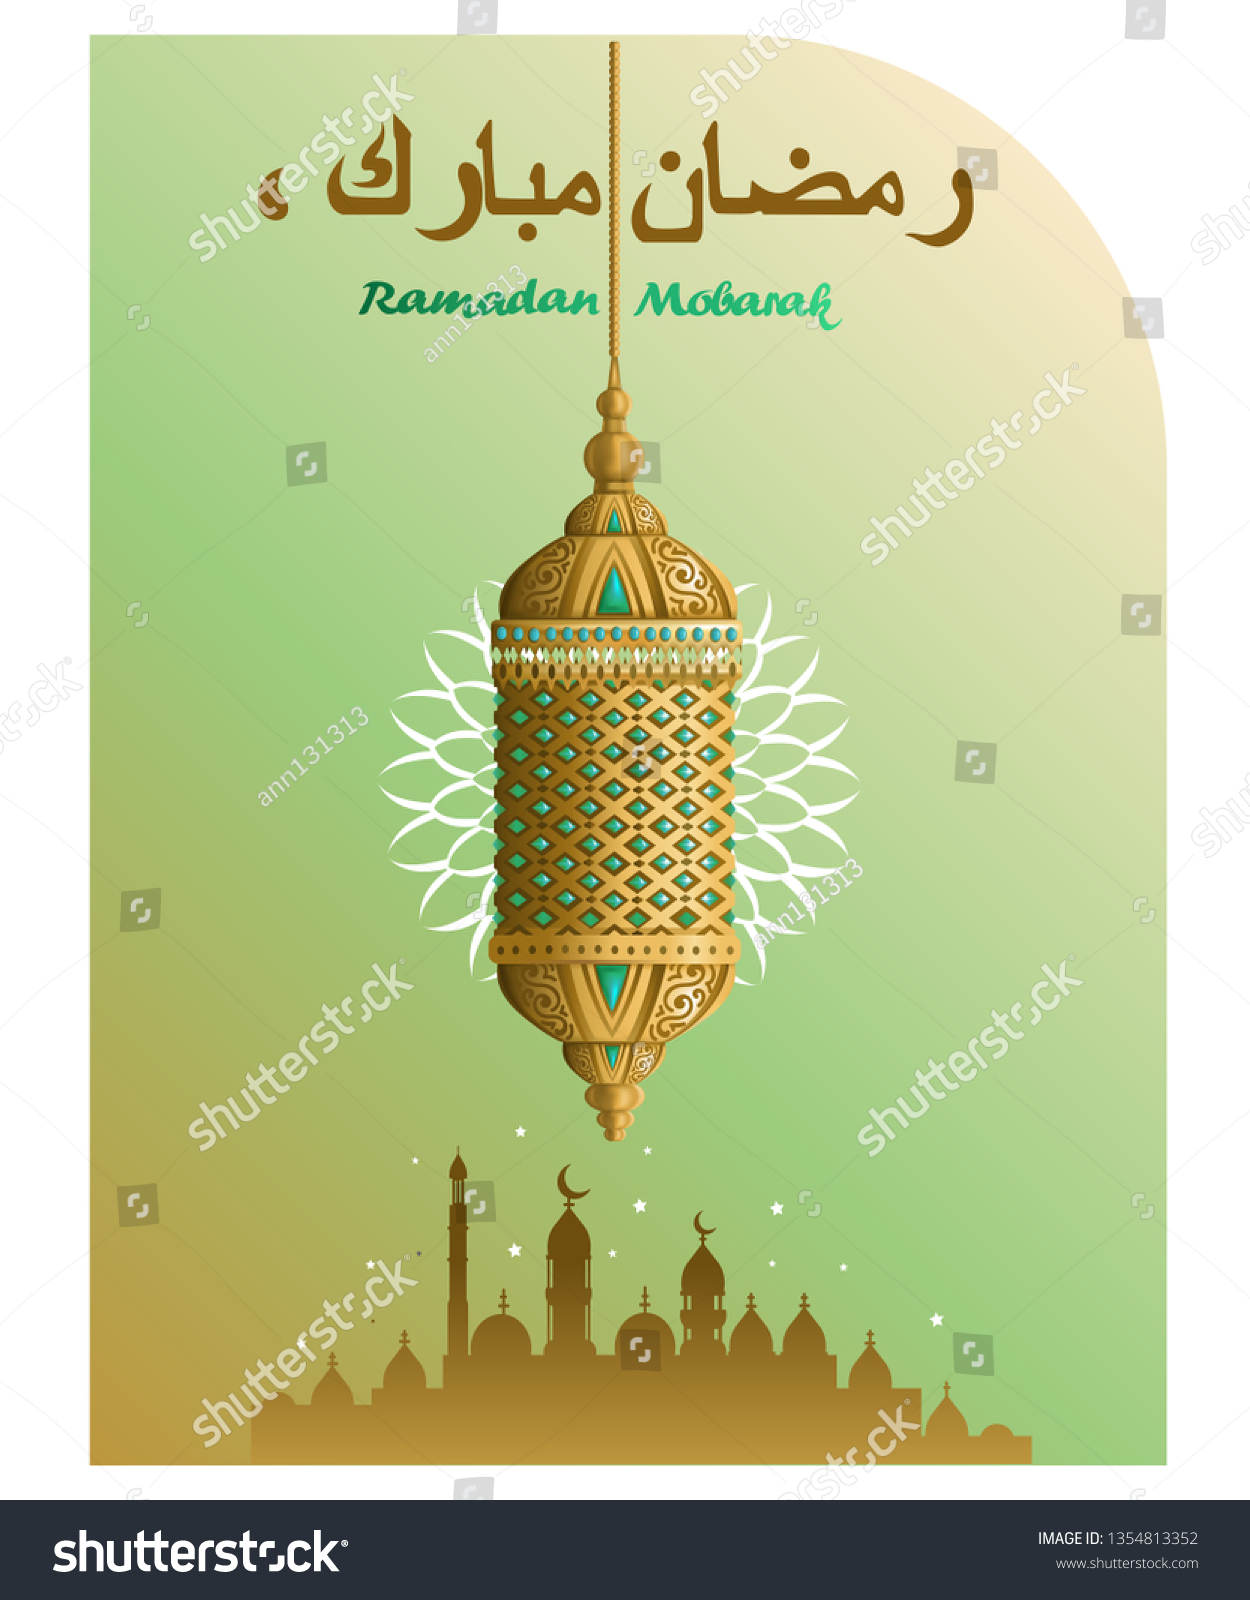 Ramadan Mubarak Greeting Islamic Design Slogan Stock Vector Royalty